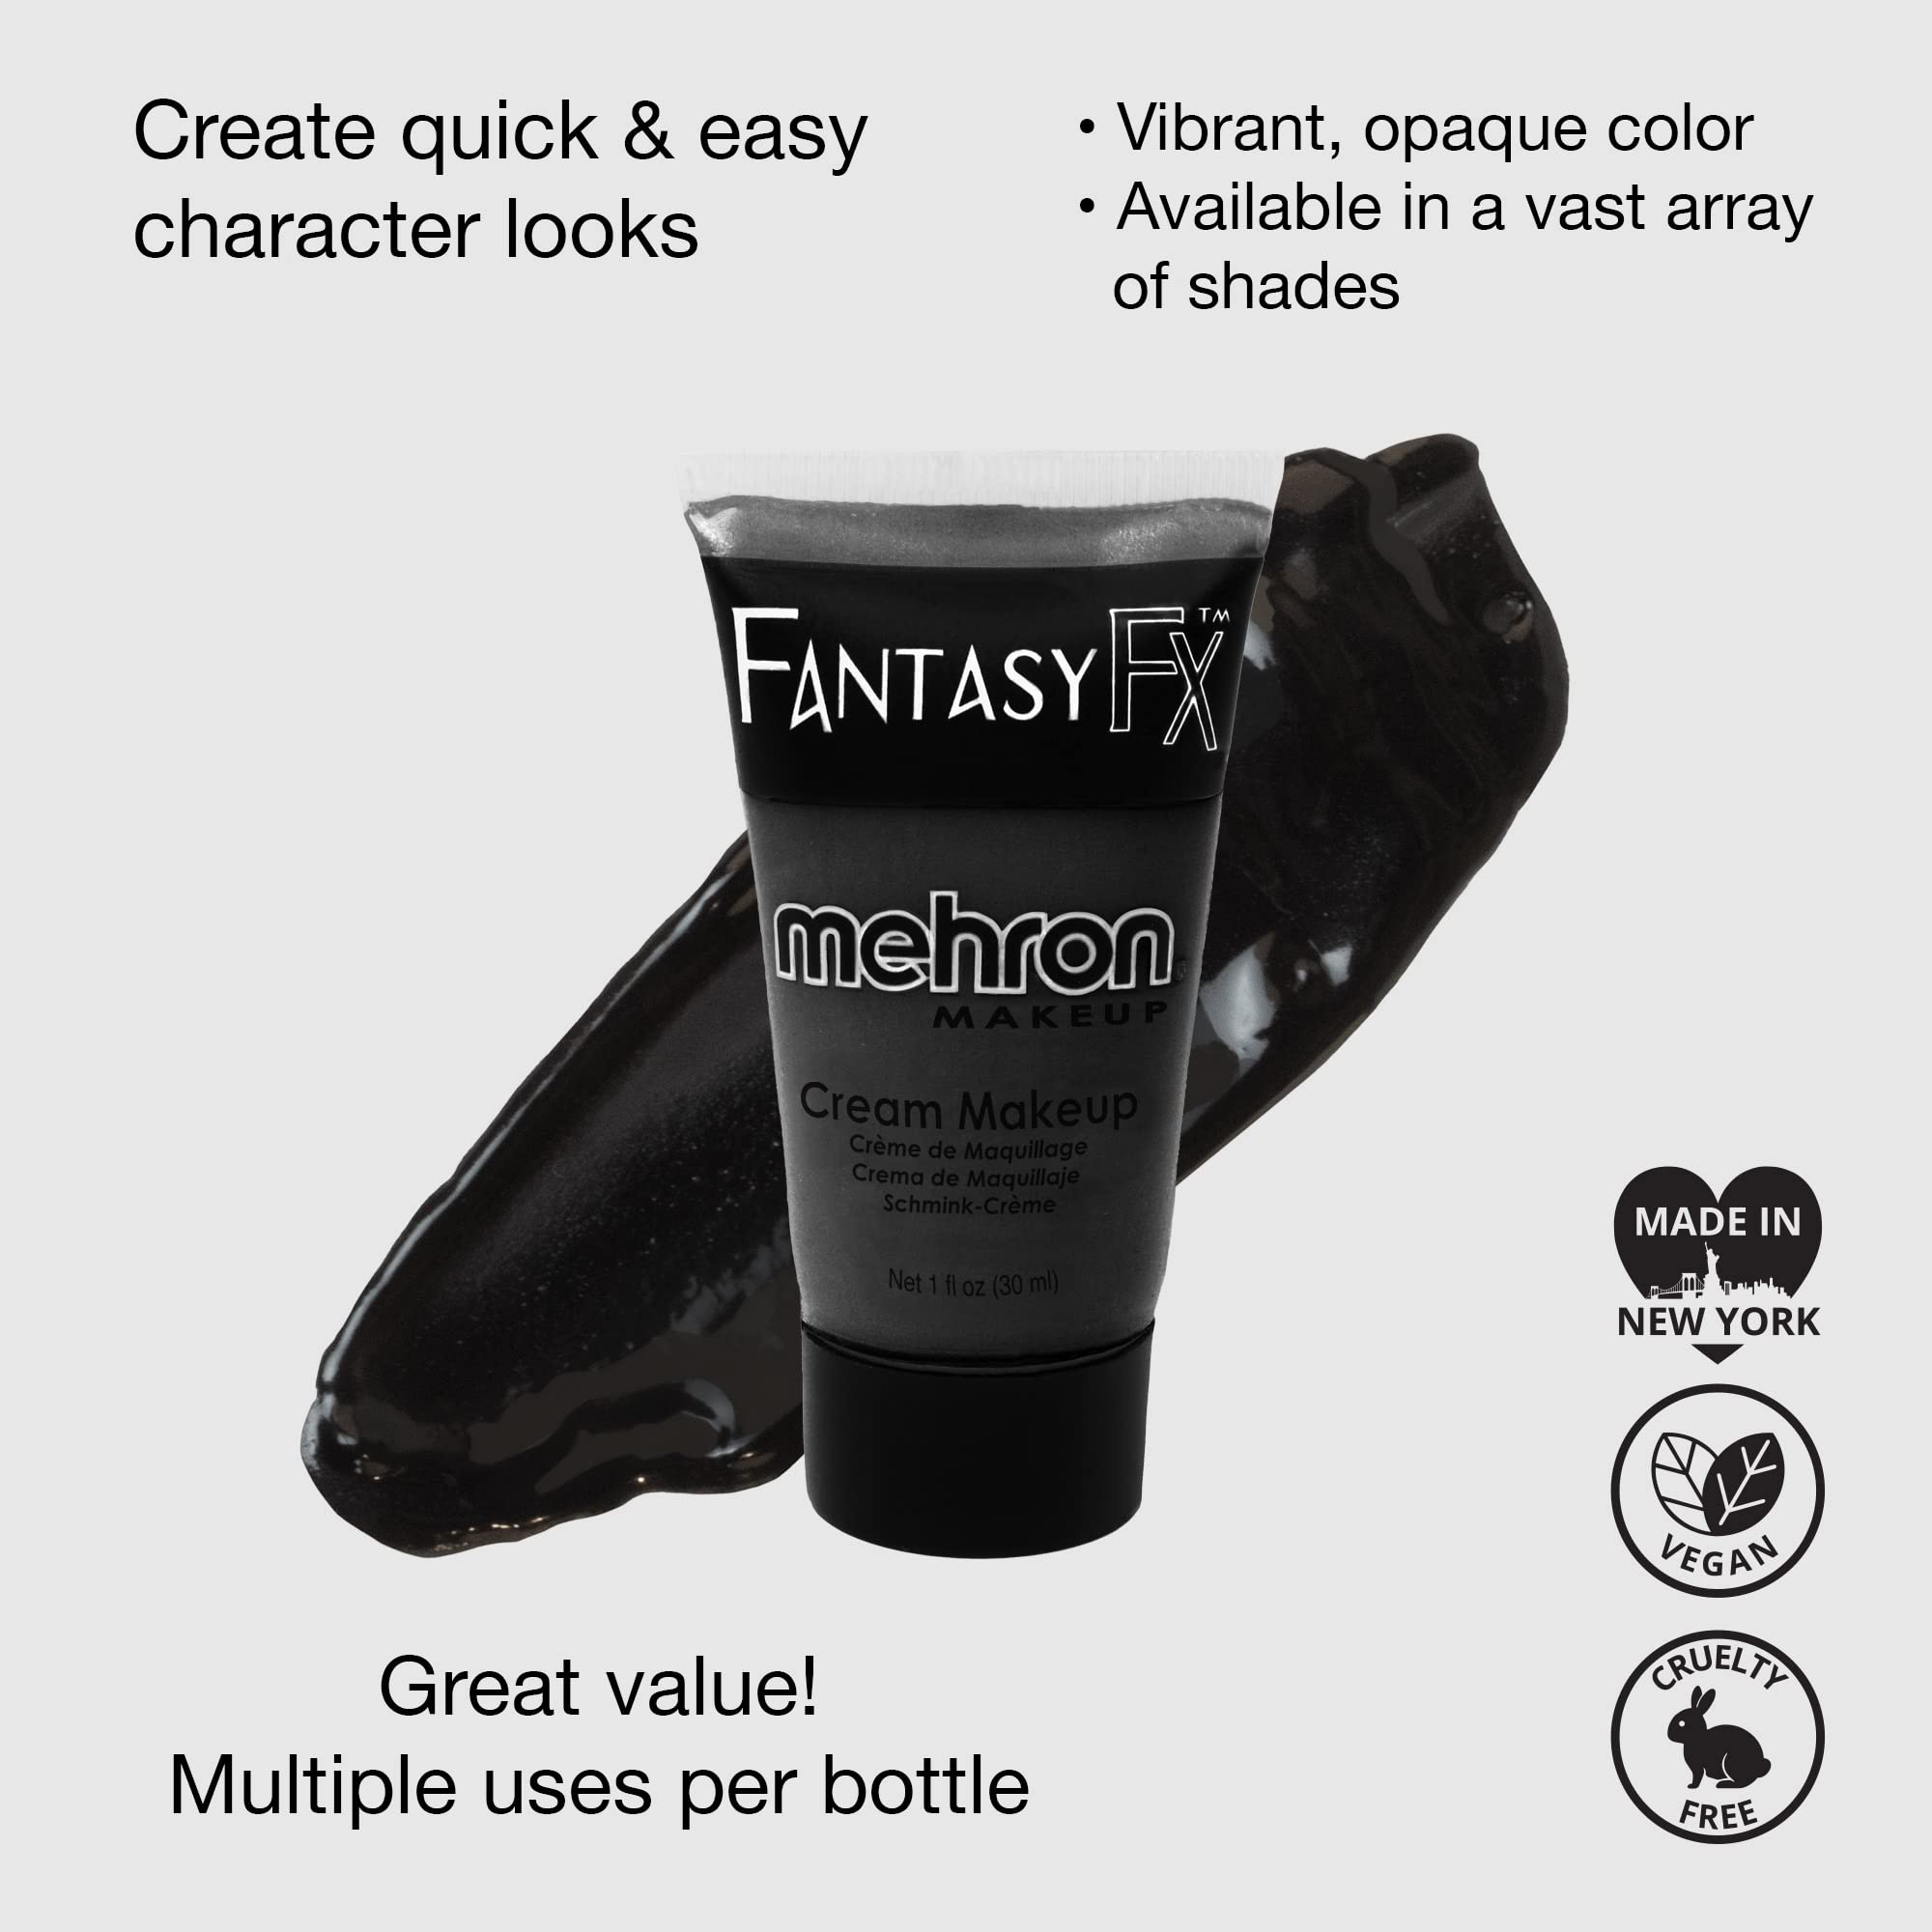 Mehron Makeup Fantasy FX Cream Makeup | Water Based Halloween Makeup | Black Face Paint & Body Paint For Adults 1 fl oz (30ml) (Black)